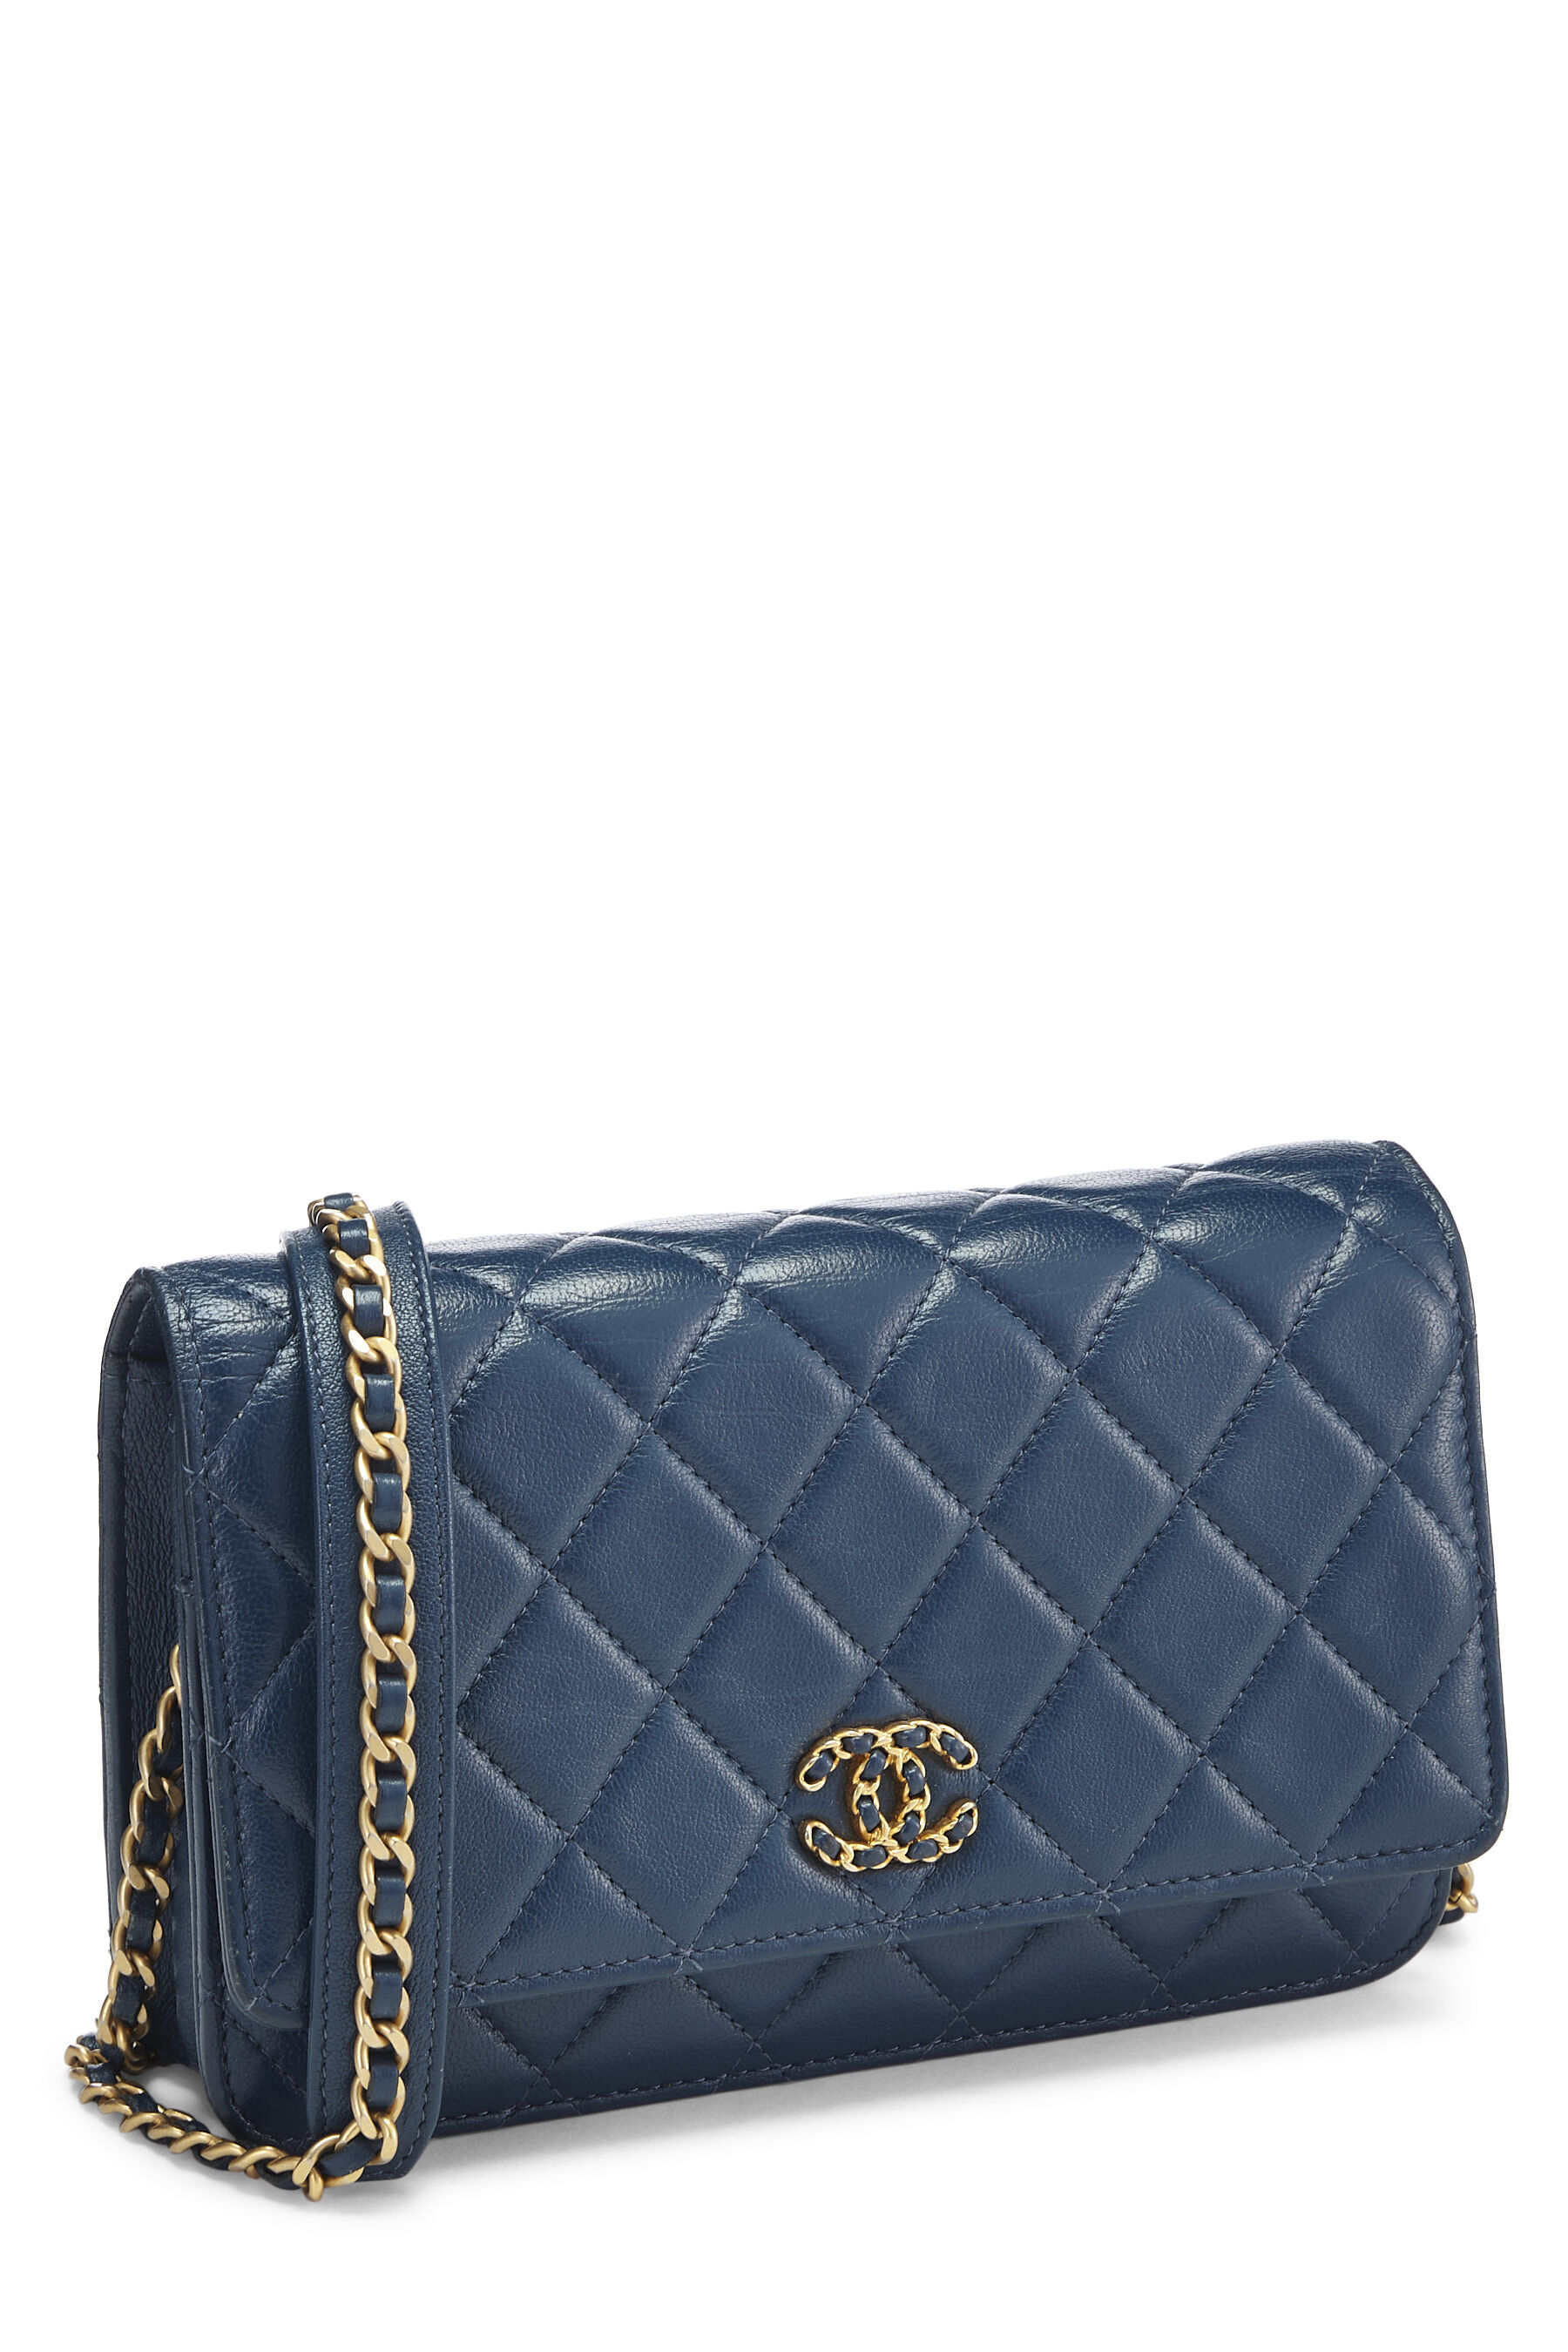 Chanel 19 wallet on chain  Cotton tweed goldtone silvertone   rutheniumfinish metal blue white  navy blue  Fashion  CHANEL